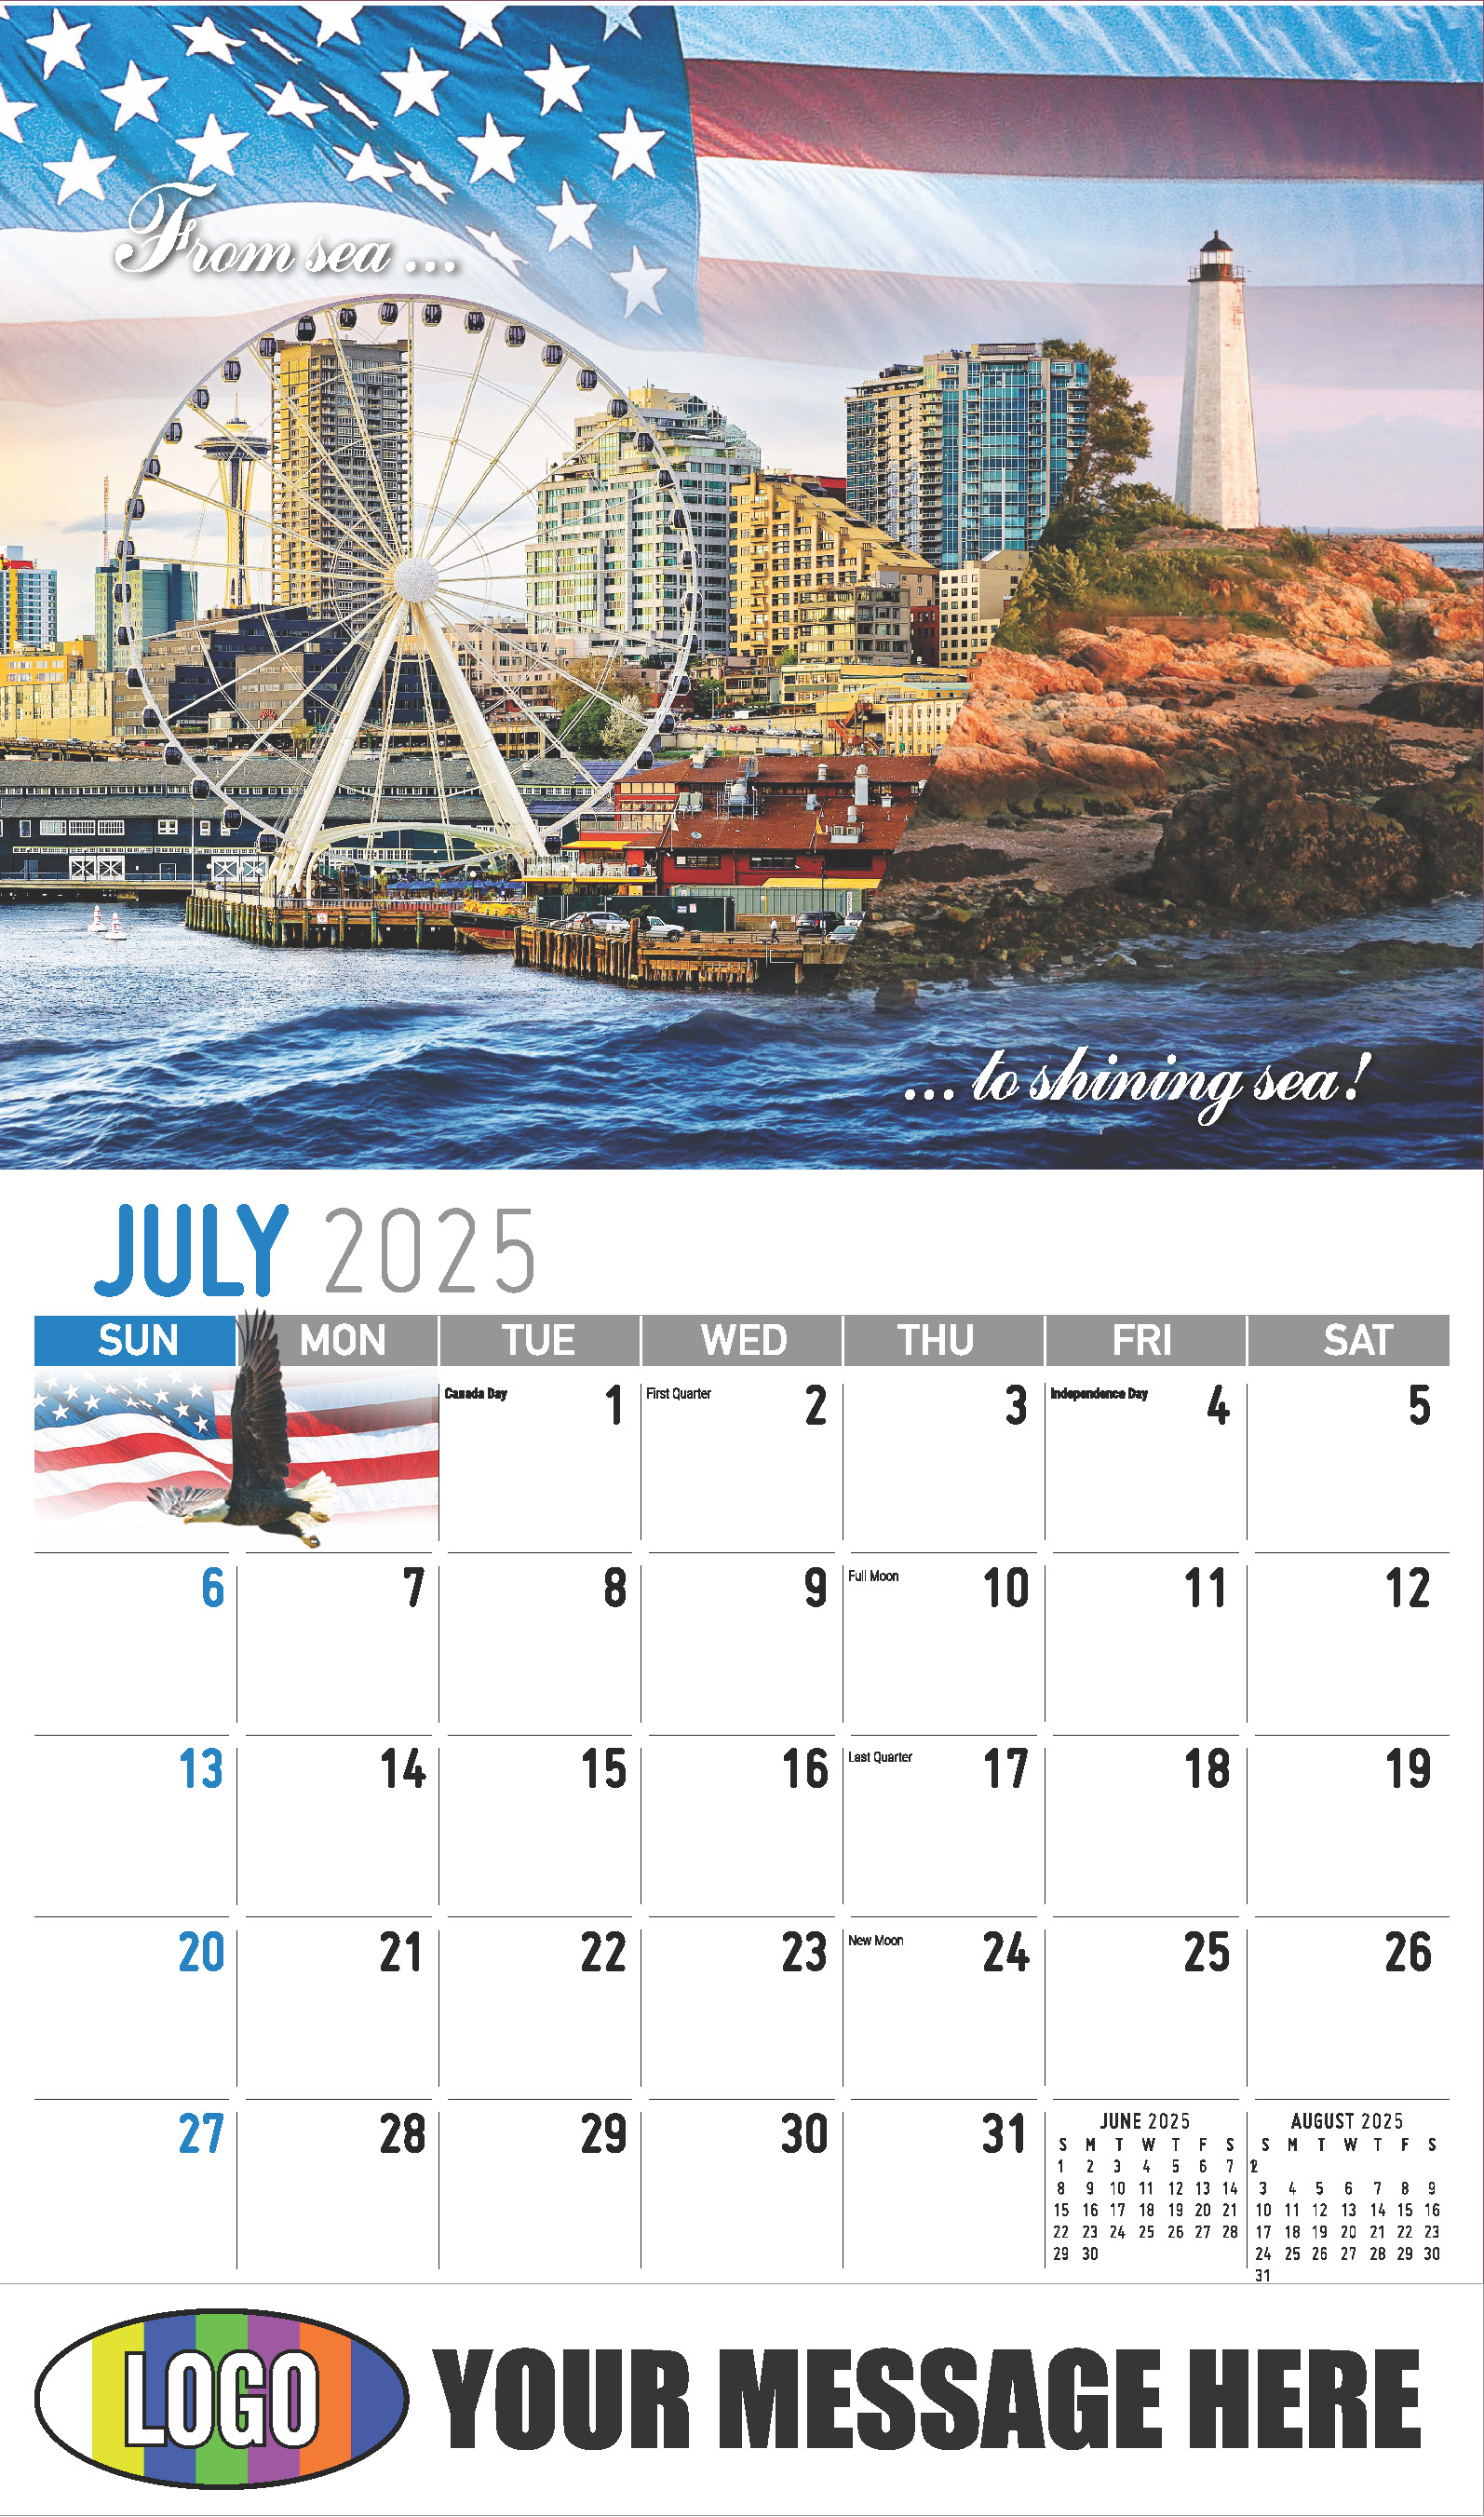 America the Beautiful  2025 Business Advertising Wall Calendar - July